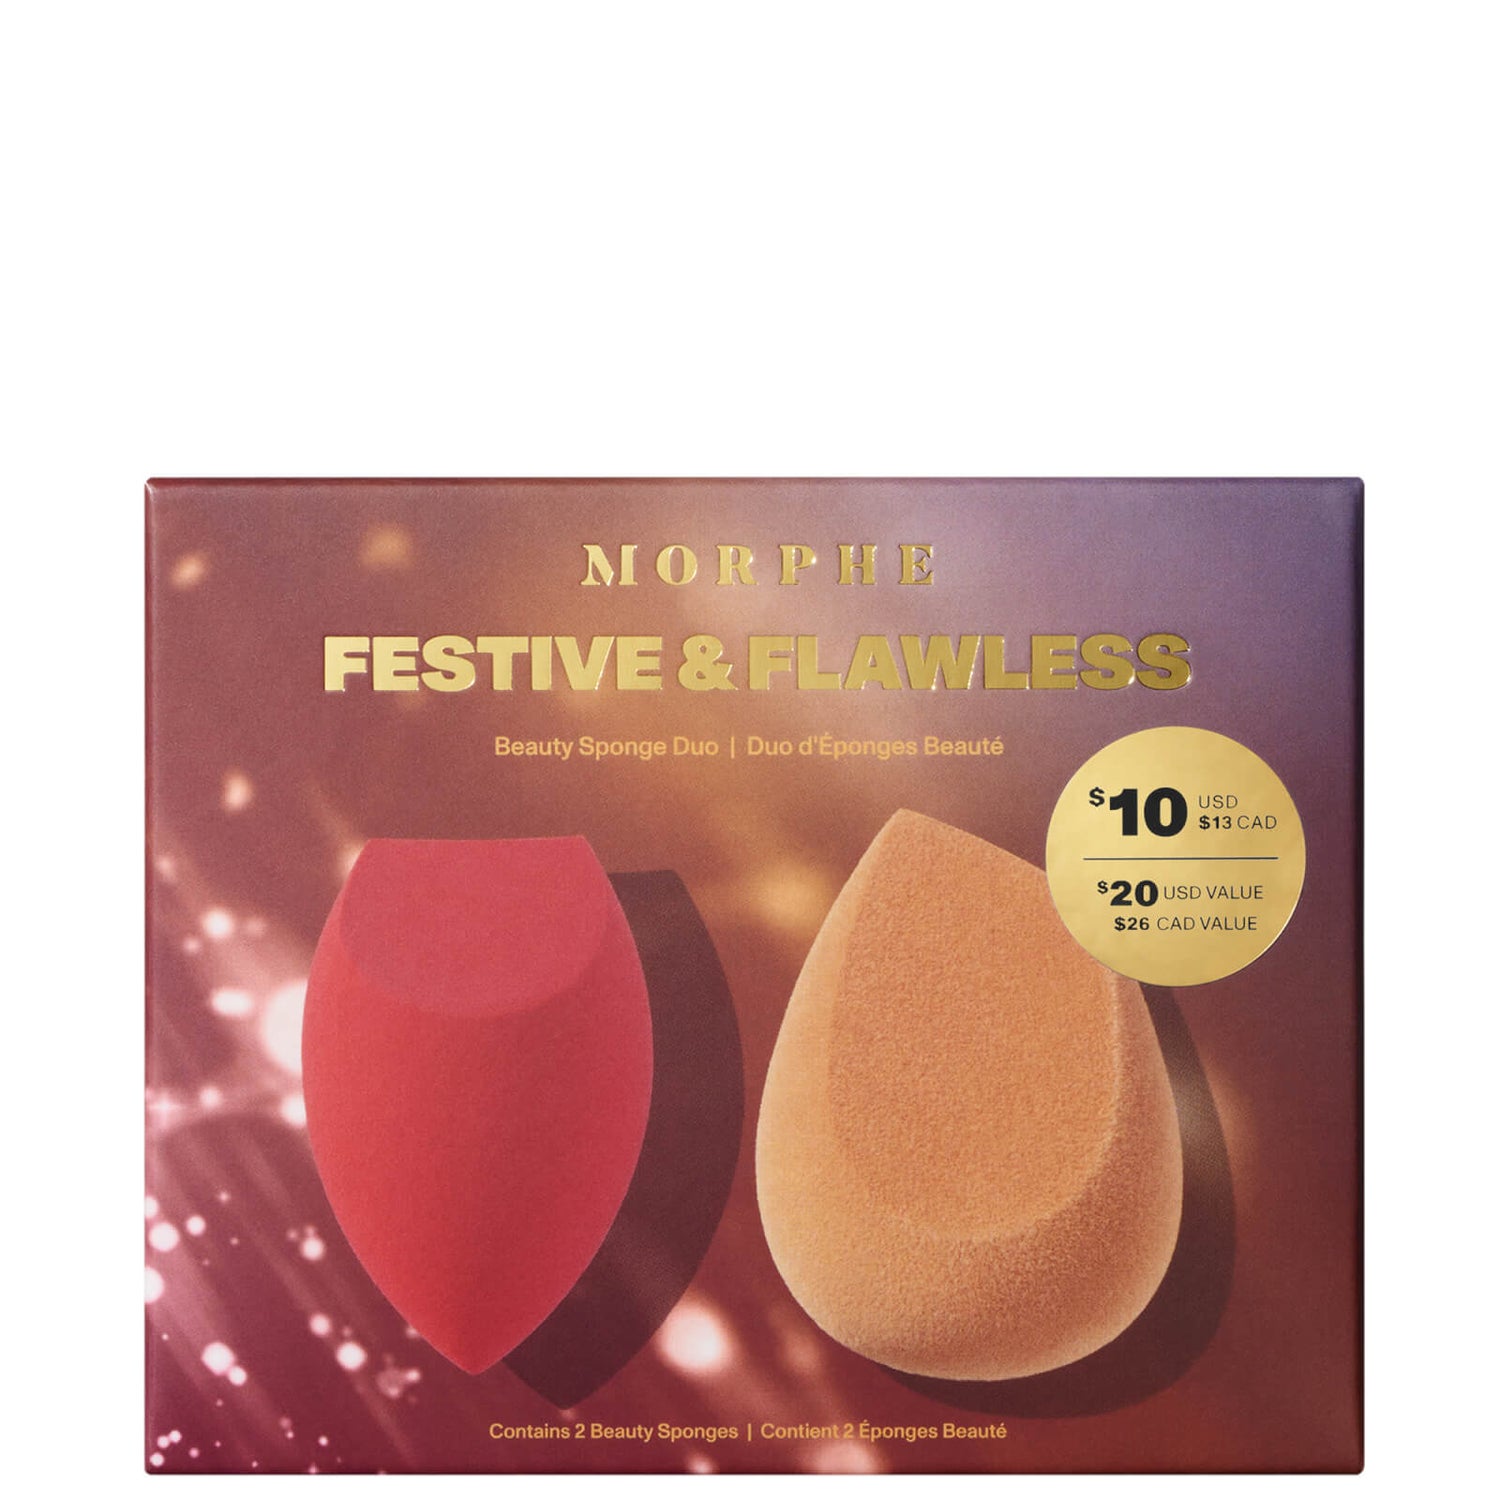 Morphe Festive and Flawless Beauty Sponge Duo